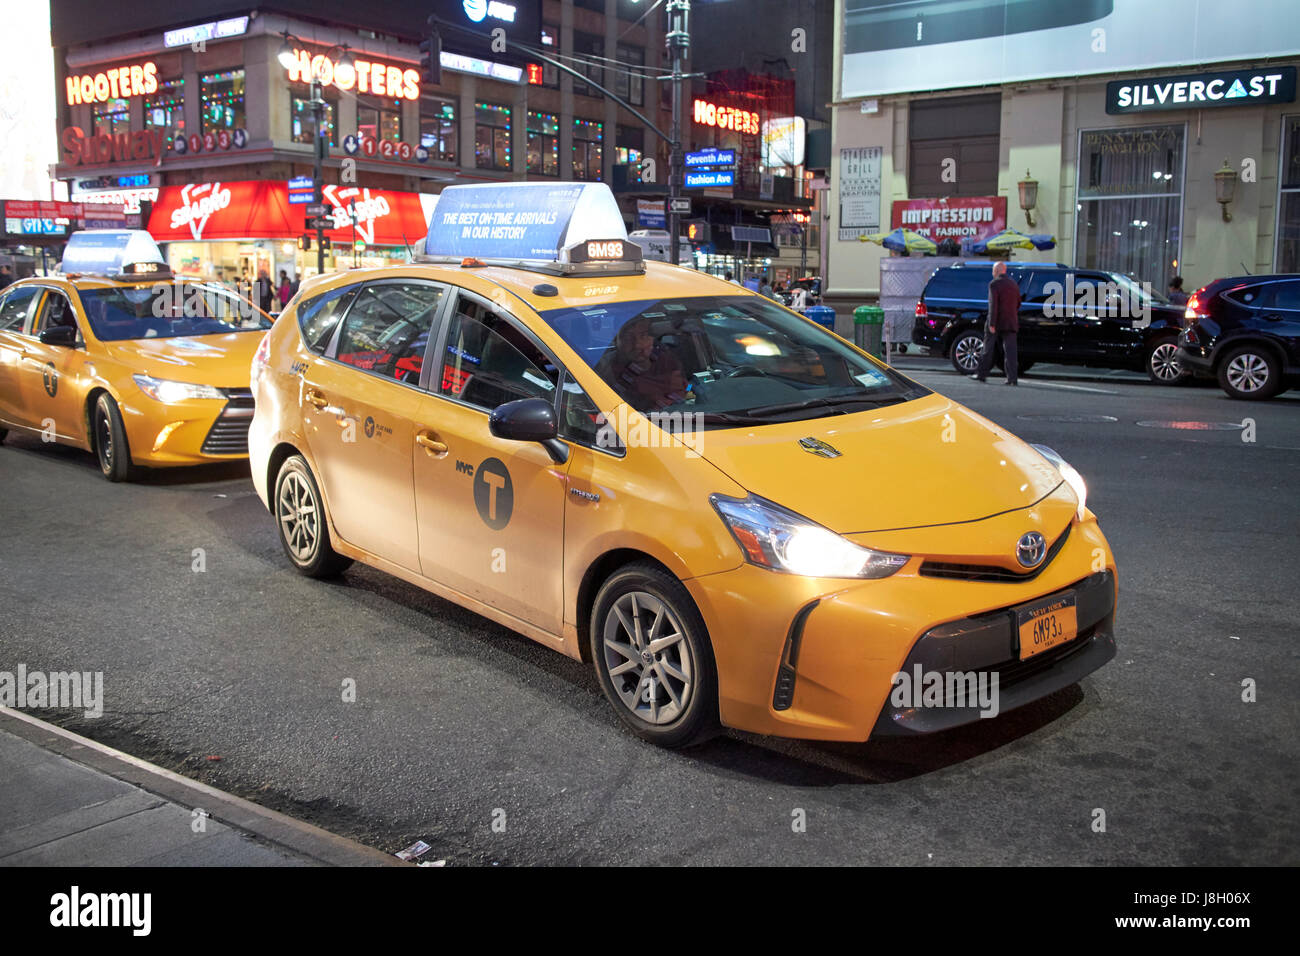 toyota prius v hybrid New York City yellow cab at night in midtown USA Stock Photo